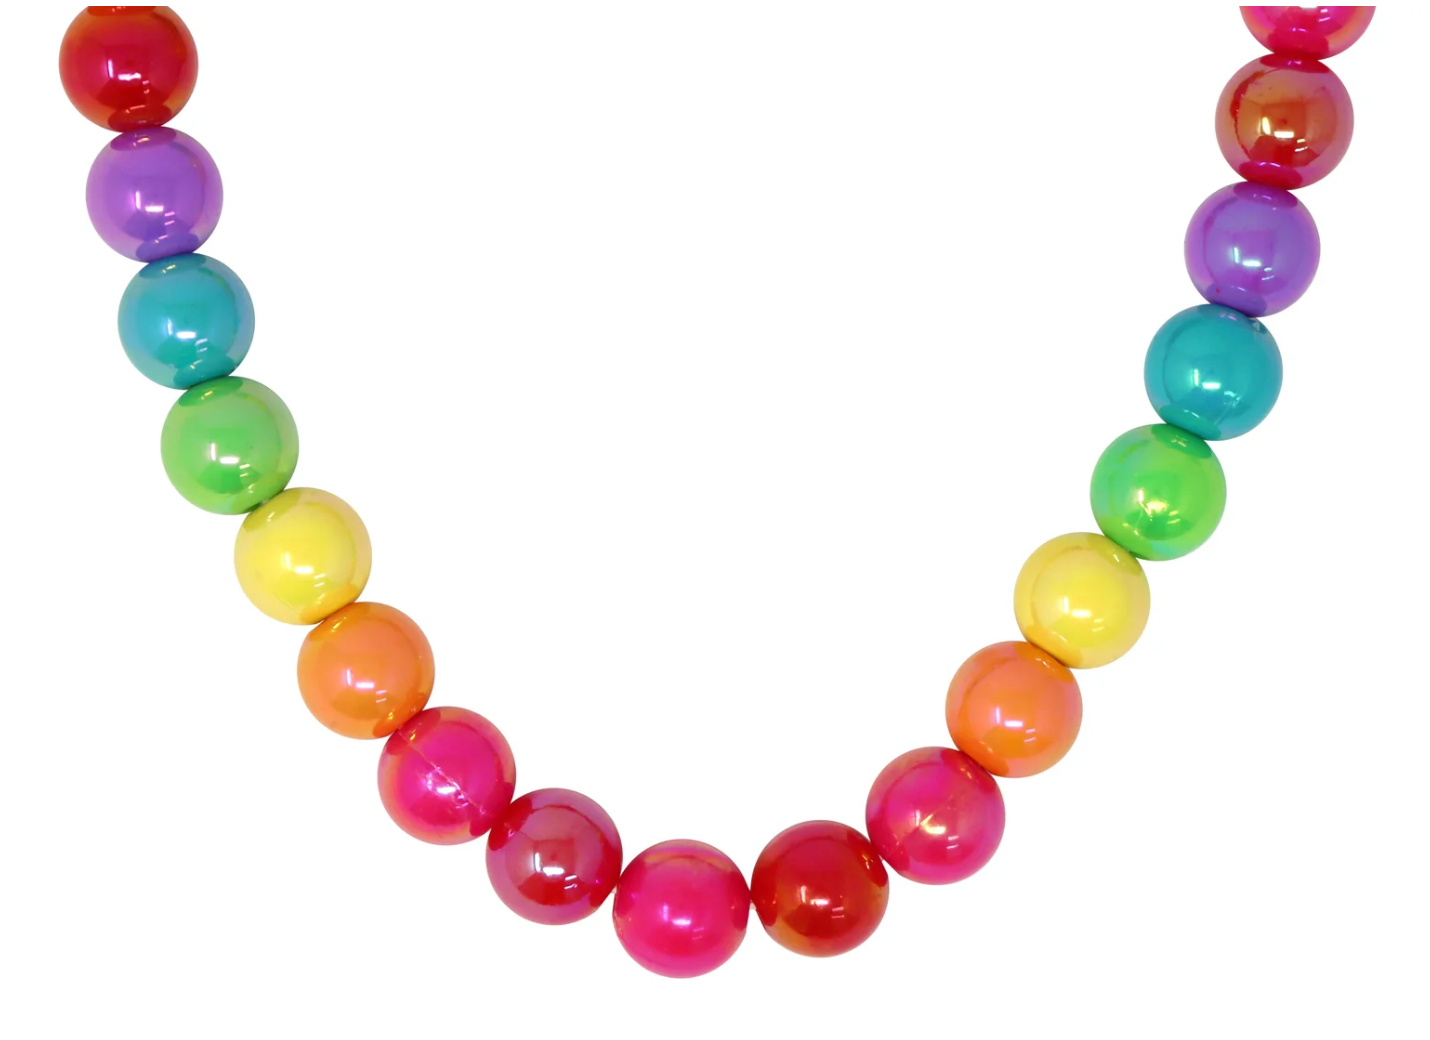 Rainbow Beads Necklace